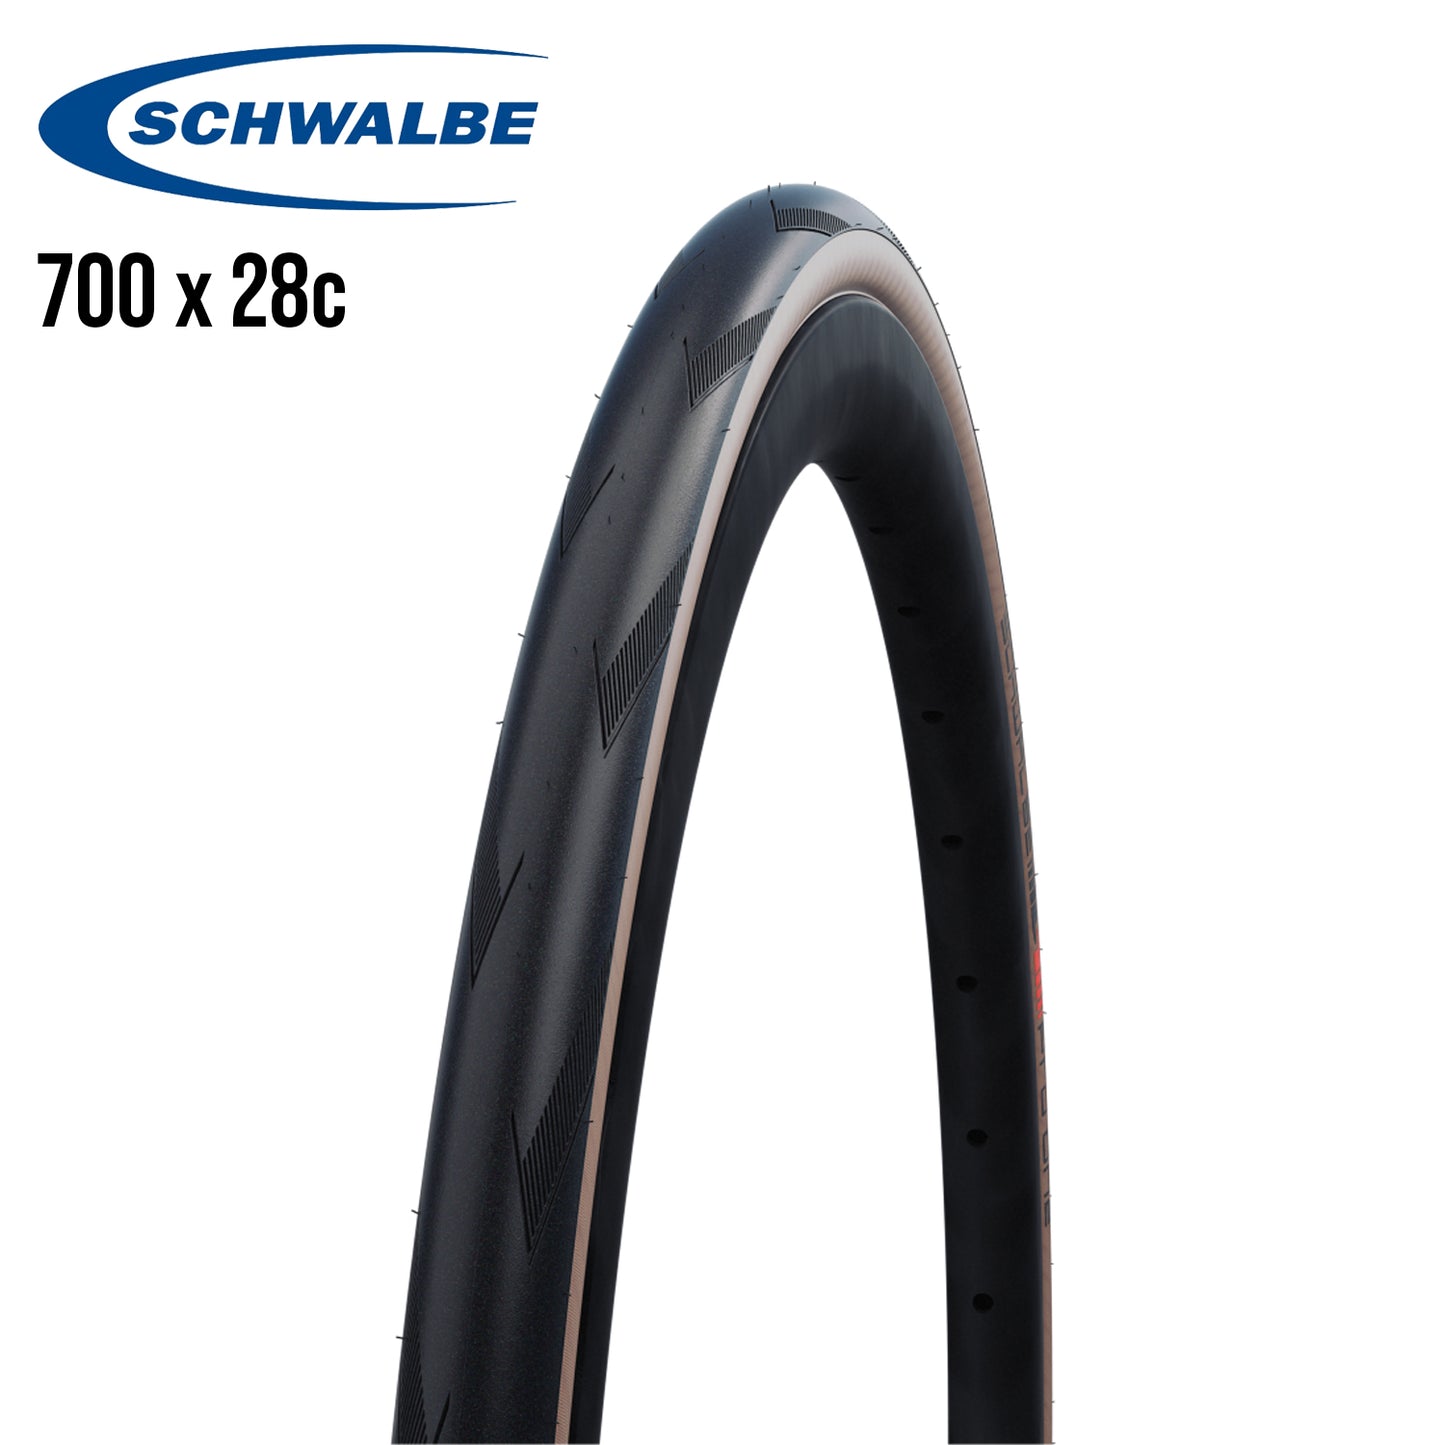 Schwalbe PRO ONE Evolution TLE Tubeless Road Bike Tire - Black/Beige